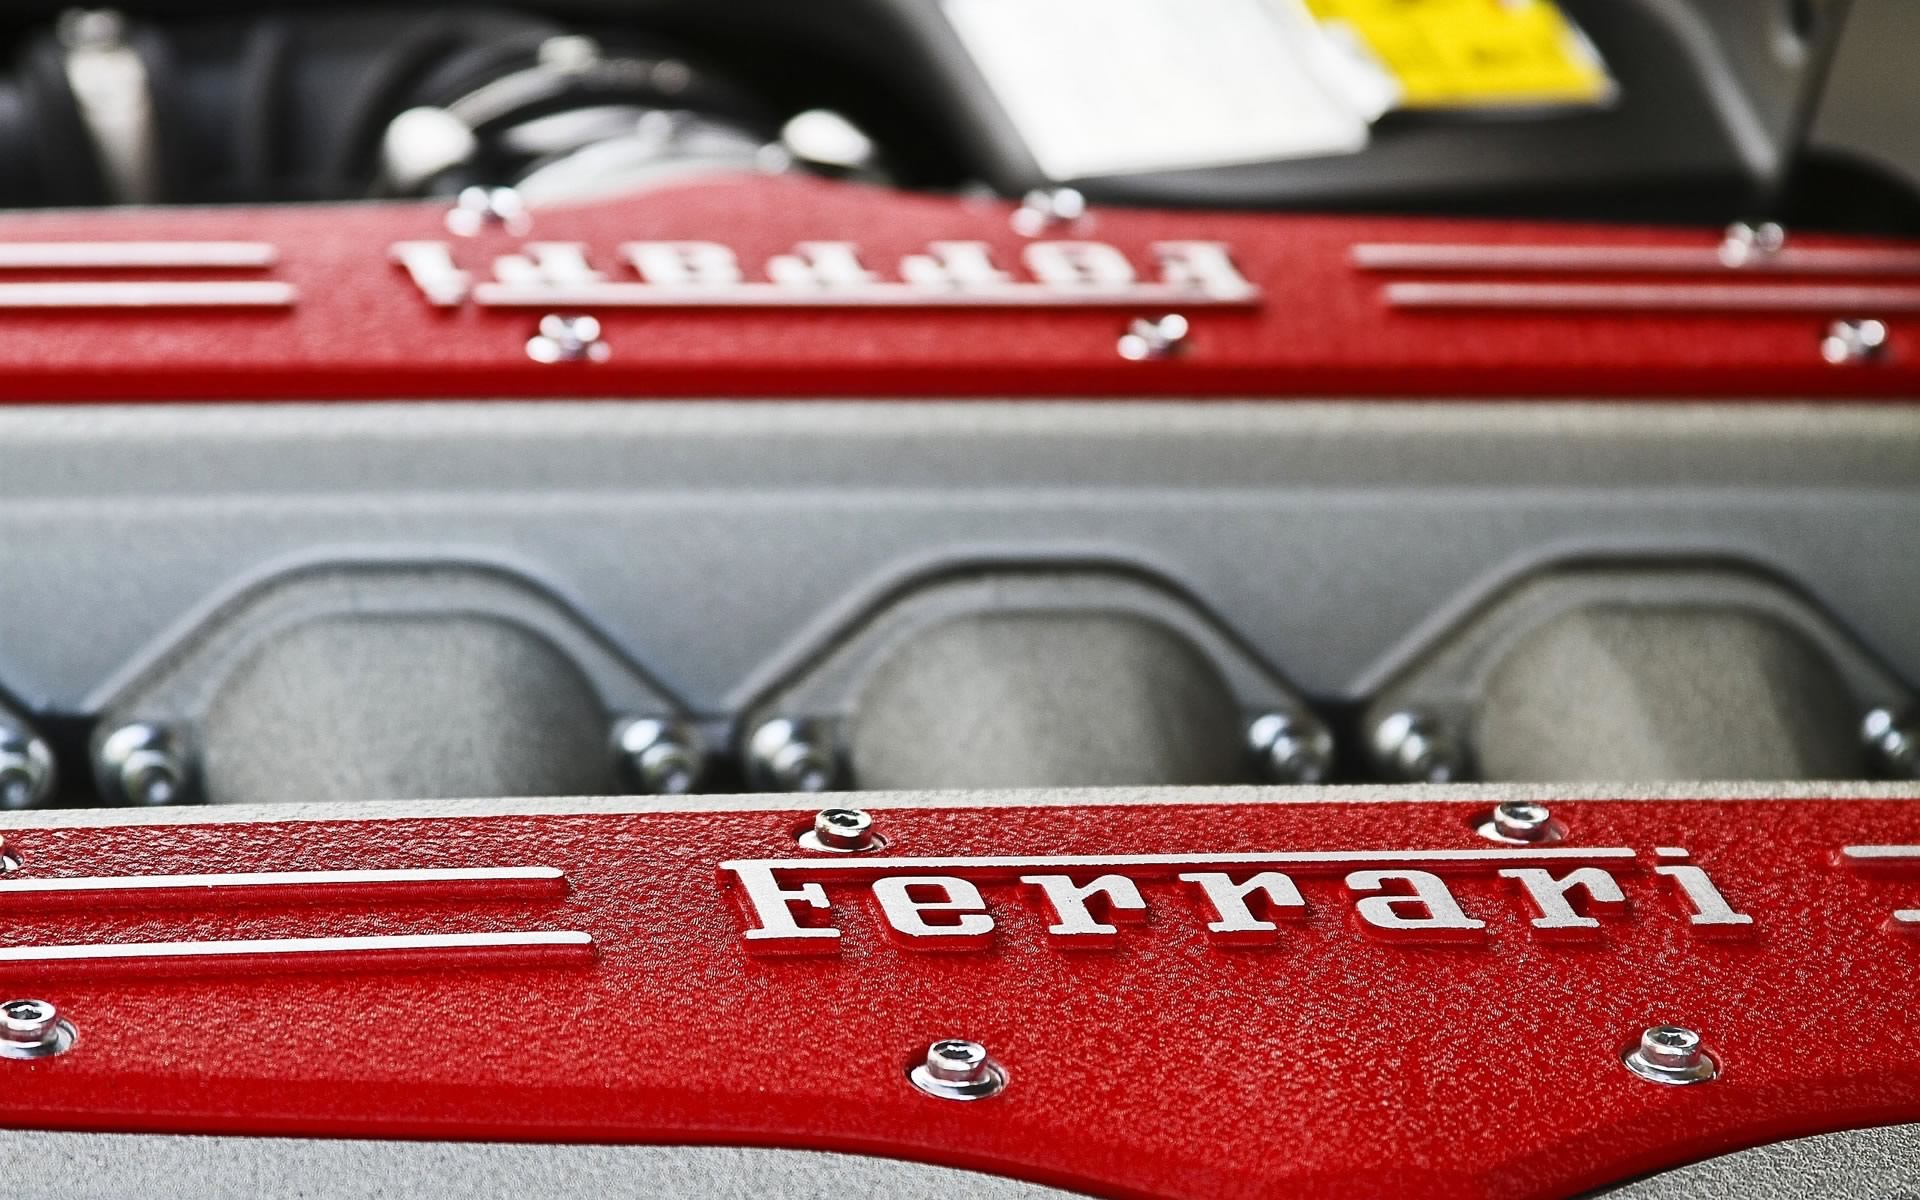 Motor Ferrari Wallpaper